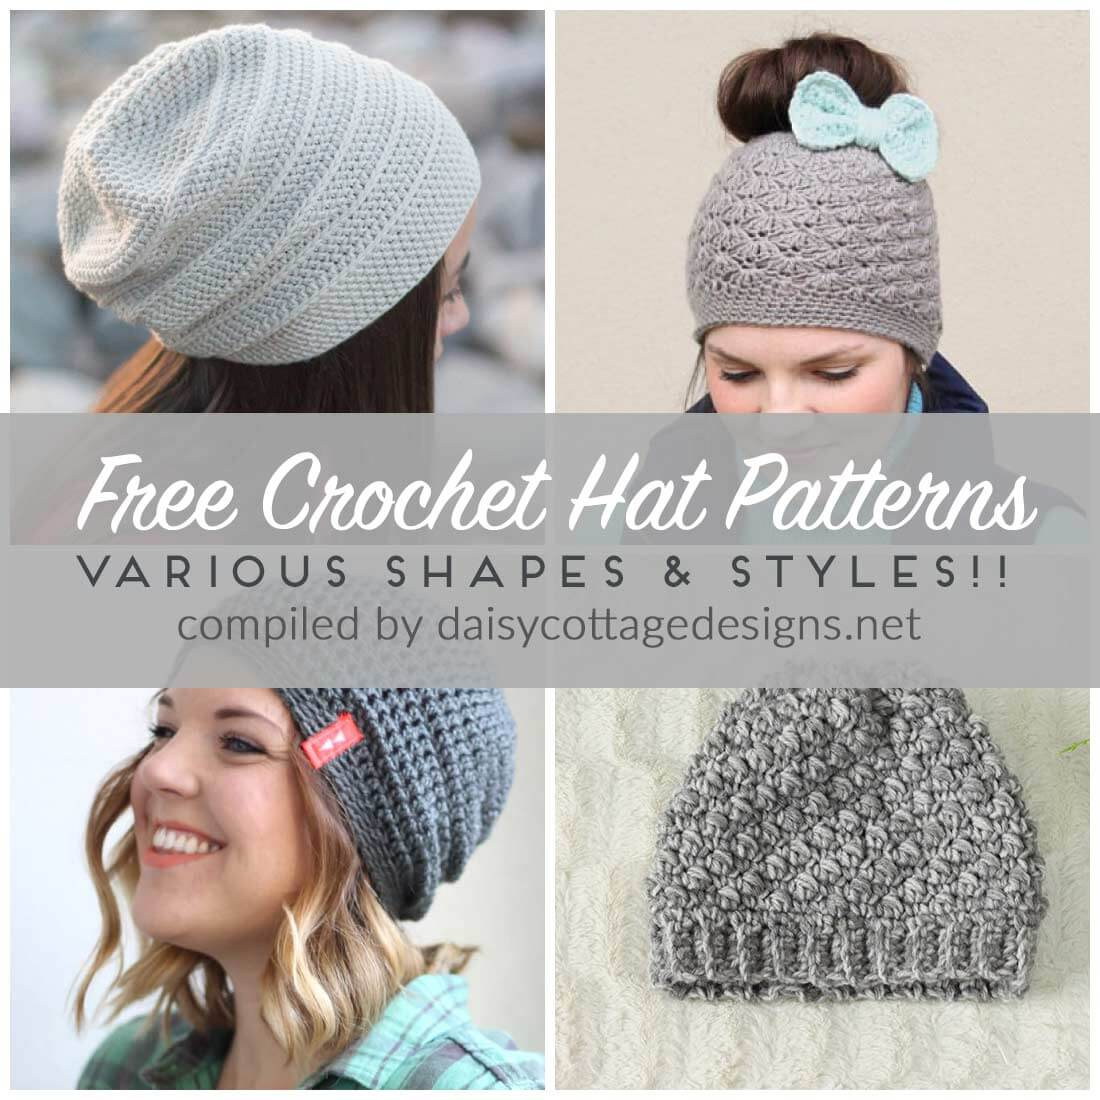 Crochet Pattern Free Free Crochet Hat Patterns Daisy Cottage Designs